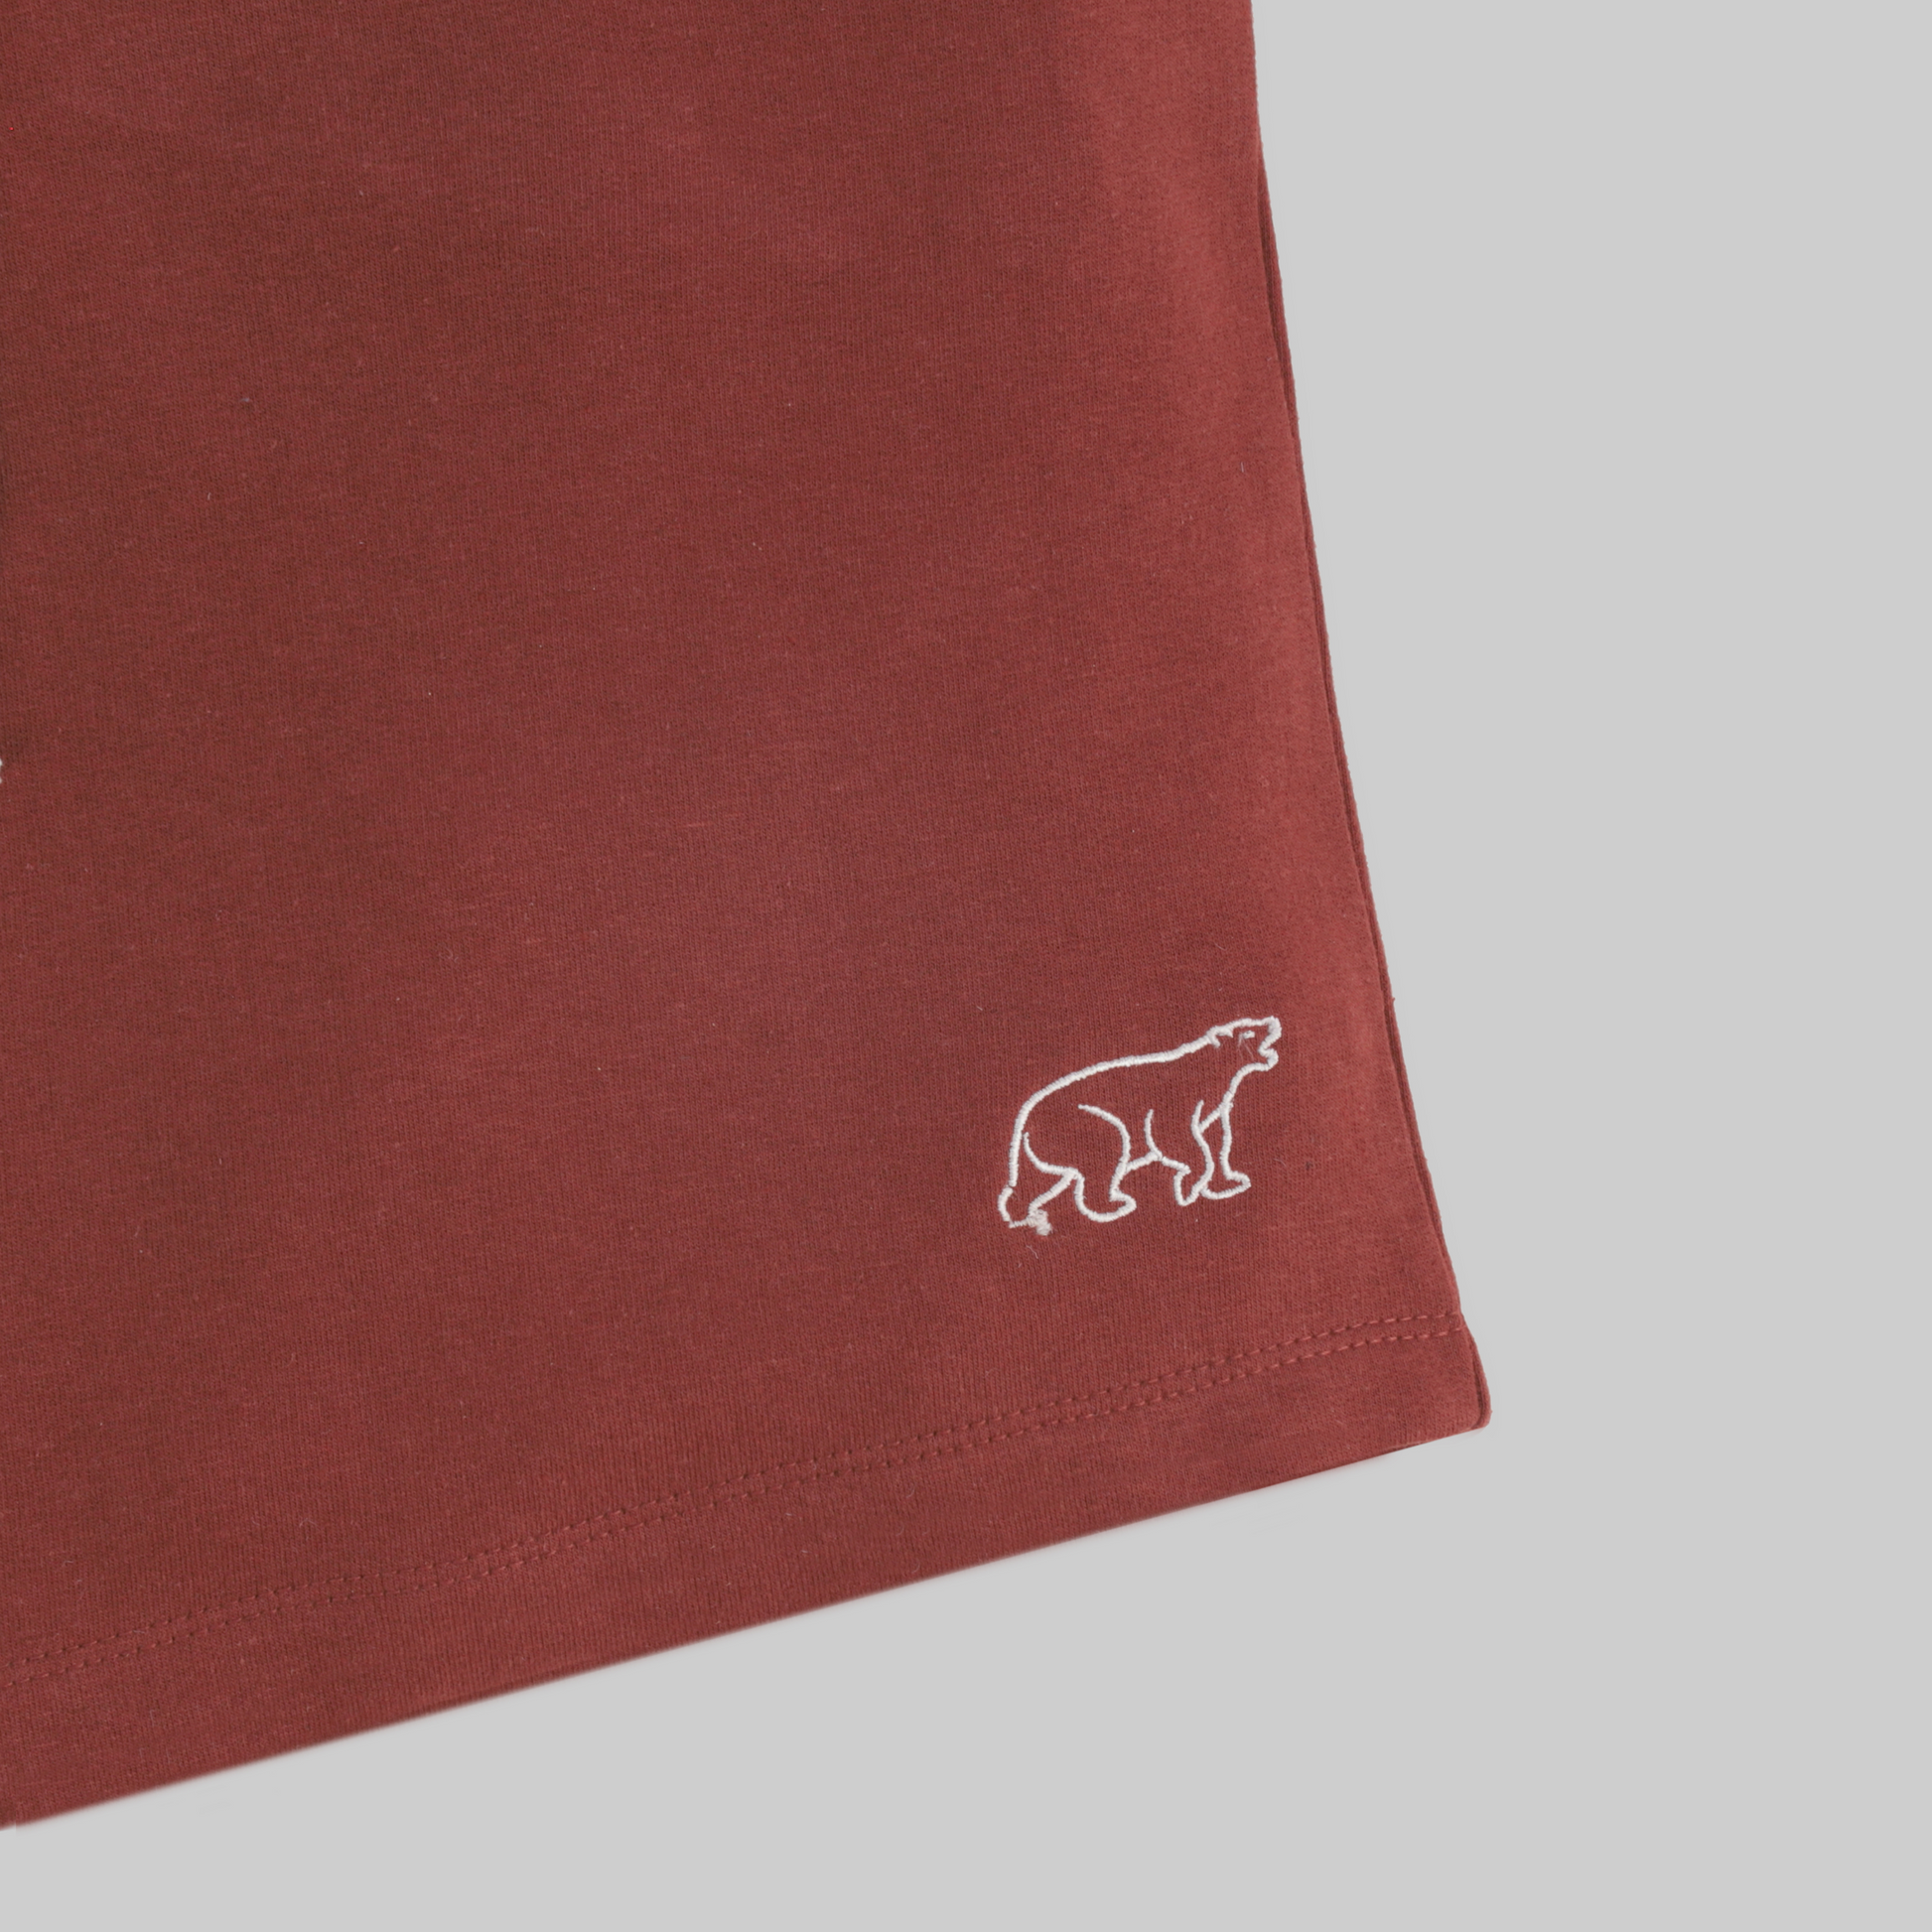 Embroidered Polarbear Shorts - Red Garnet - trangoclothing